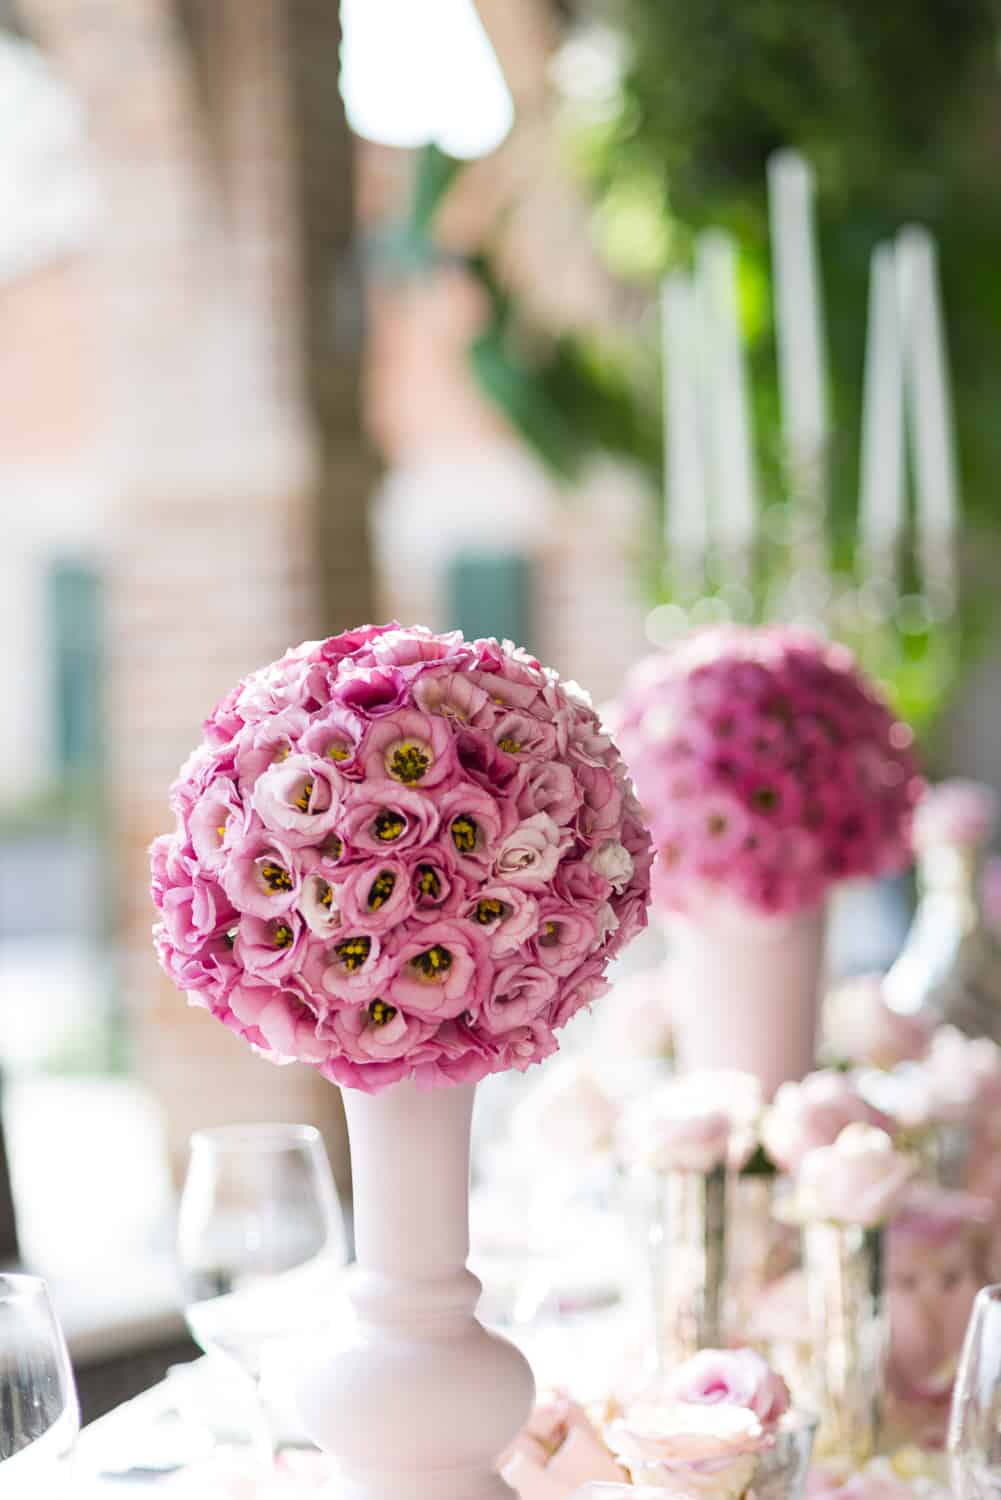 Lisianthus-Eustoma-Flower-Bridal-White-Arrangement-Bouquet-Decoration-Pink-White-Blue-Green-Red-Colour-Salmon-Wedding-Party-Romantic-Modern